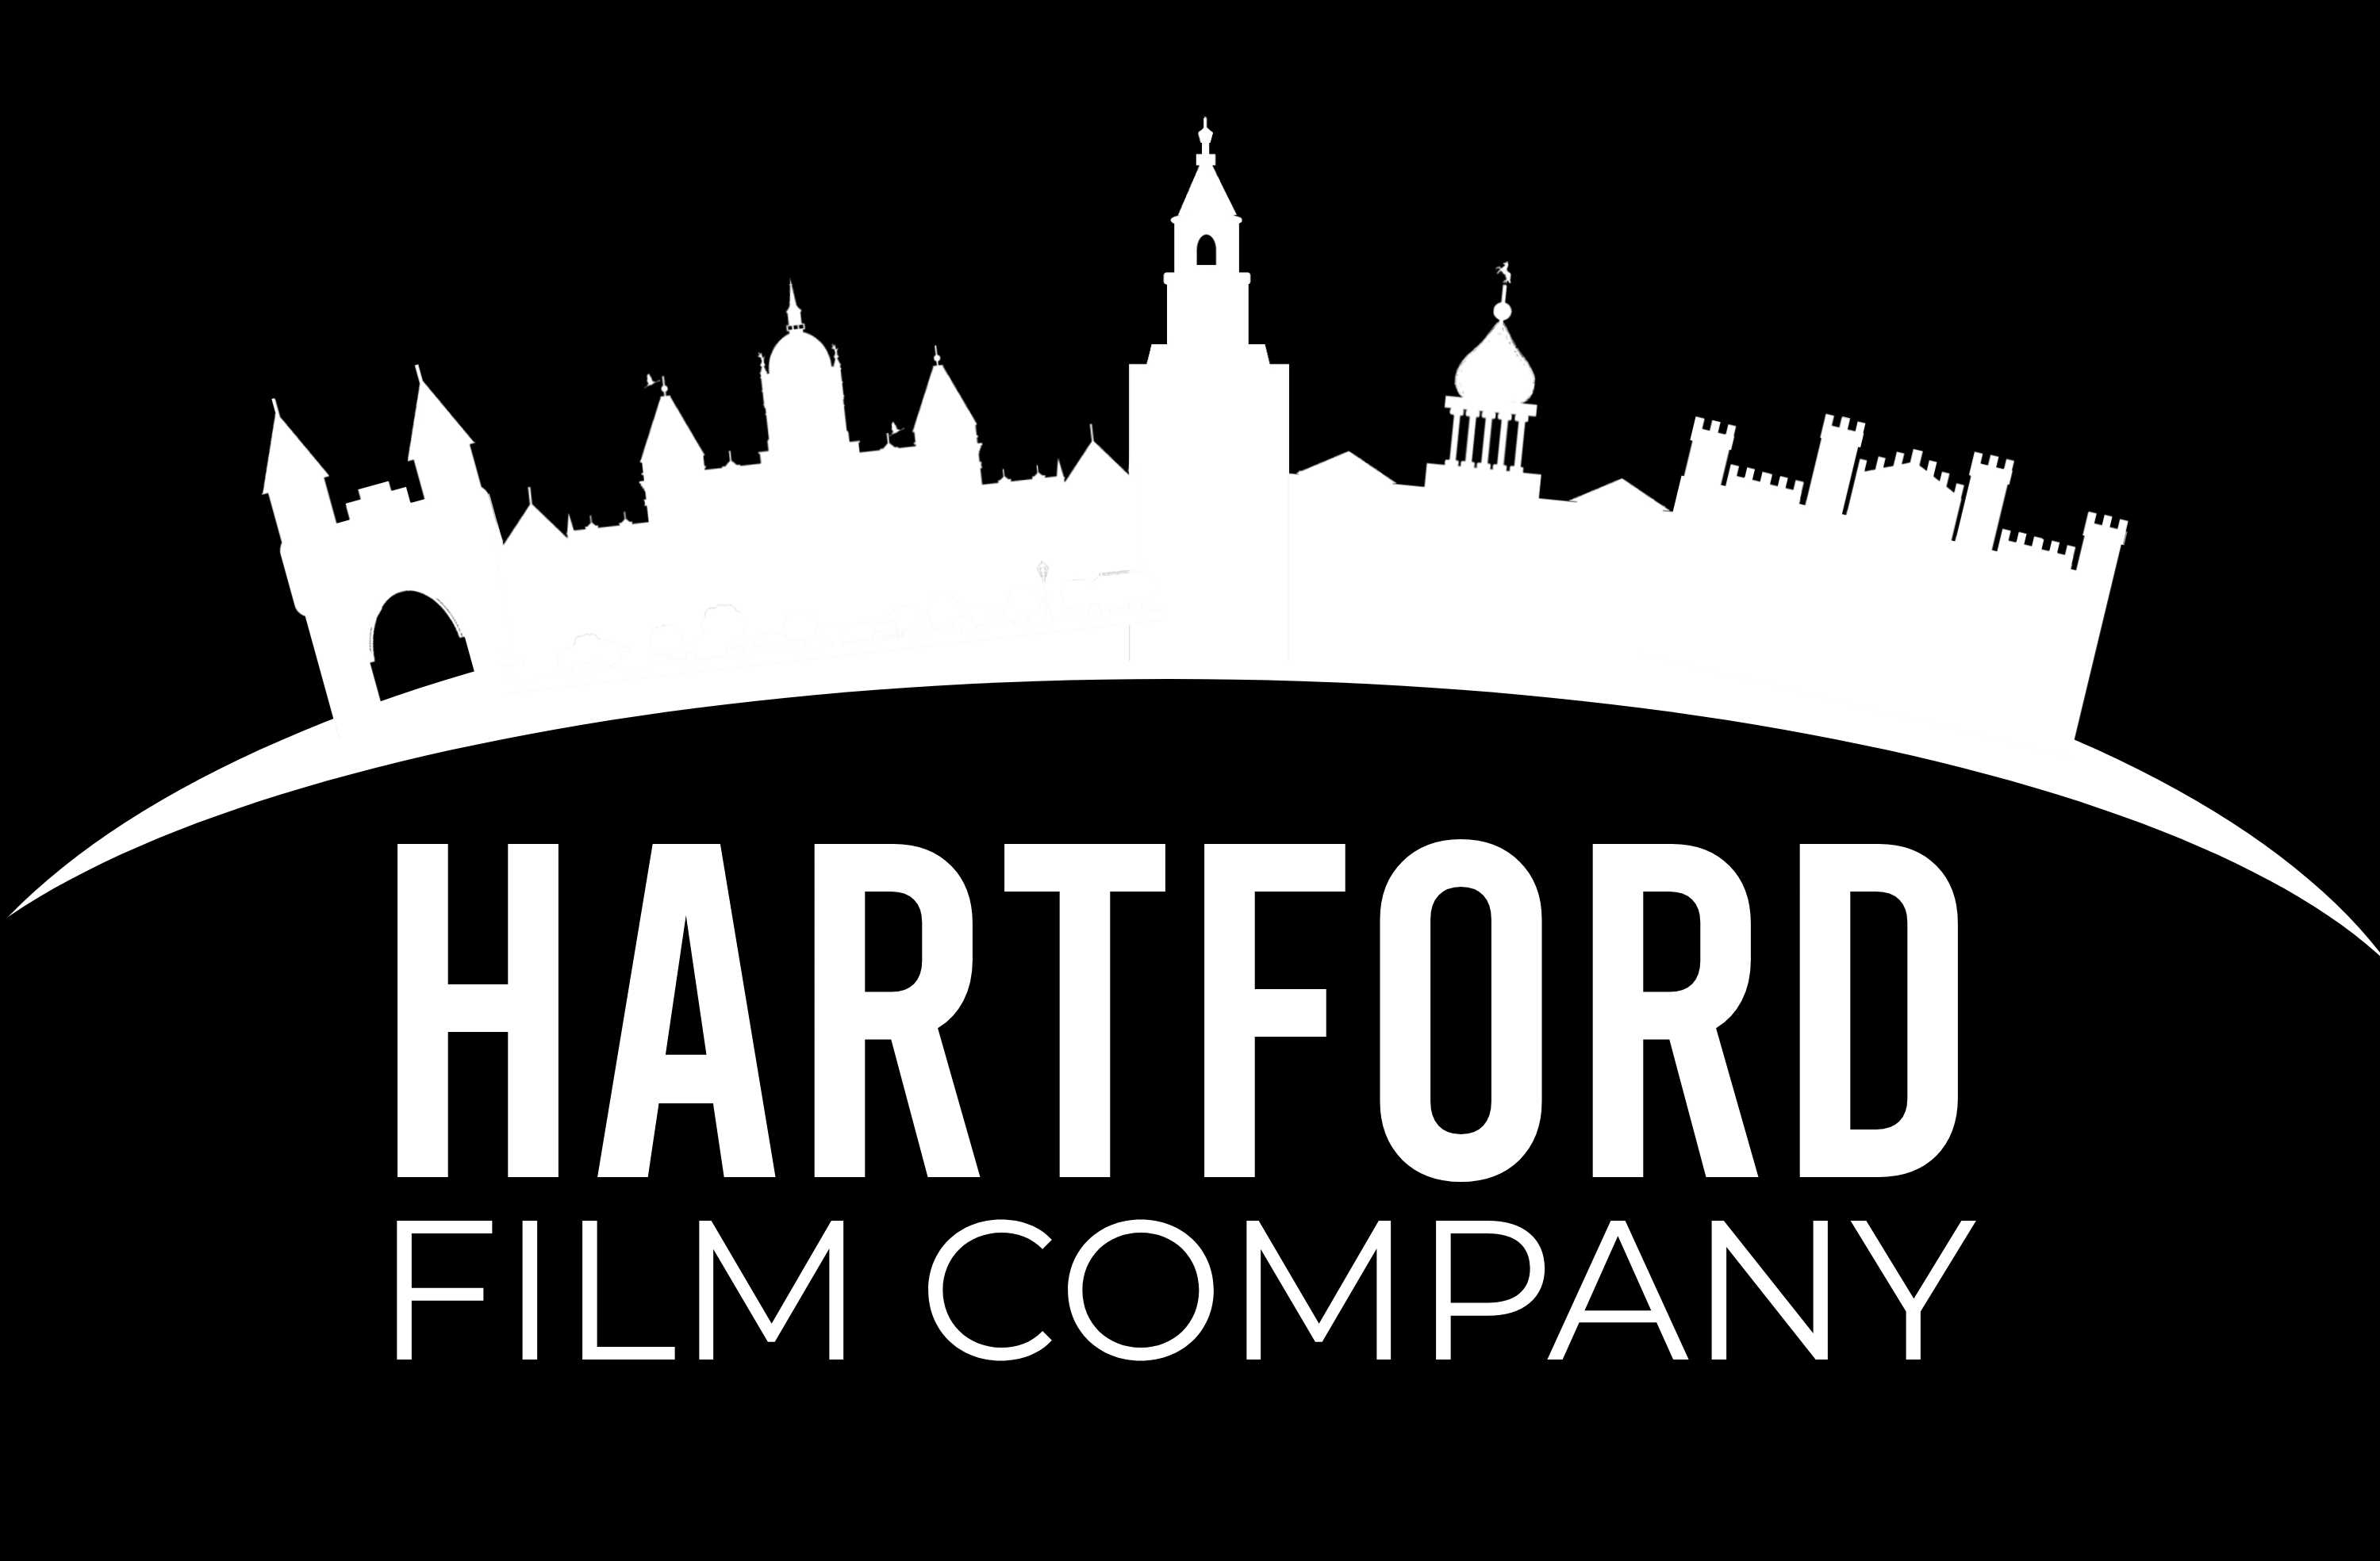 The Hartford Film Company